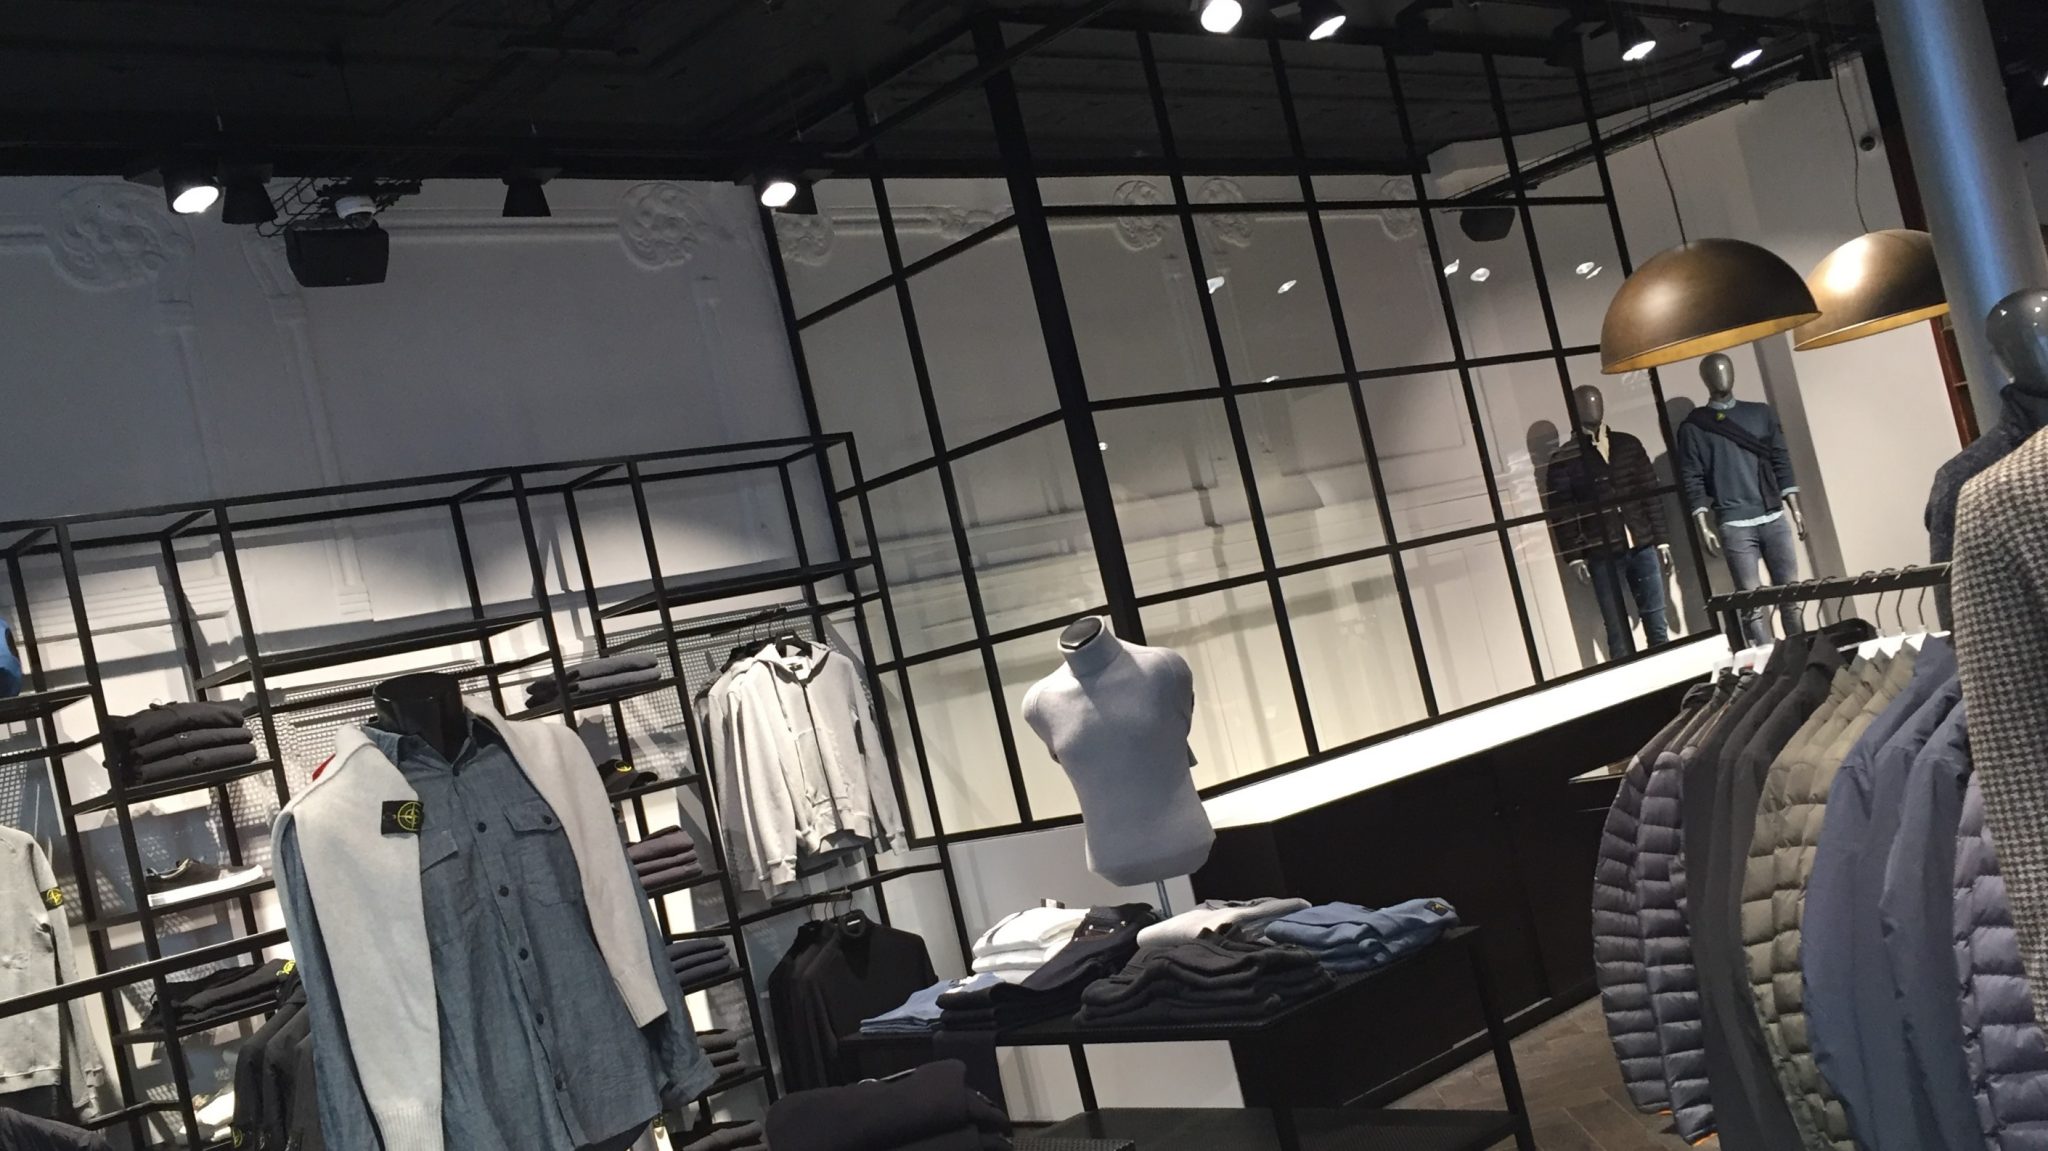 Kopenhagen | Inspiratiereis Retail Design, part 1 - Inspiratiereizen